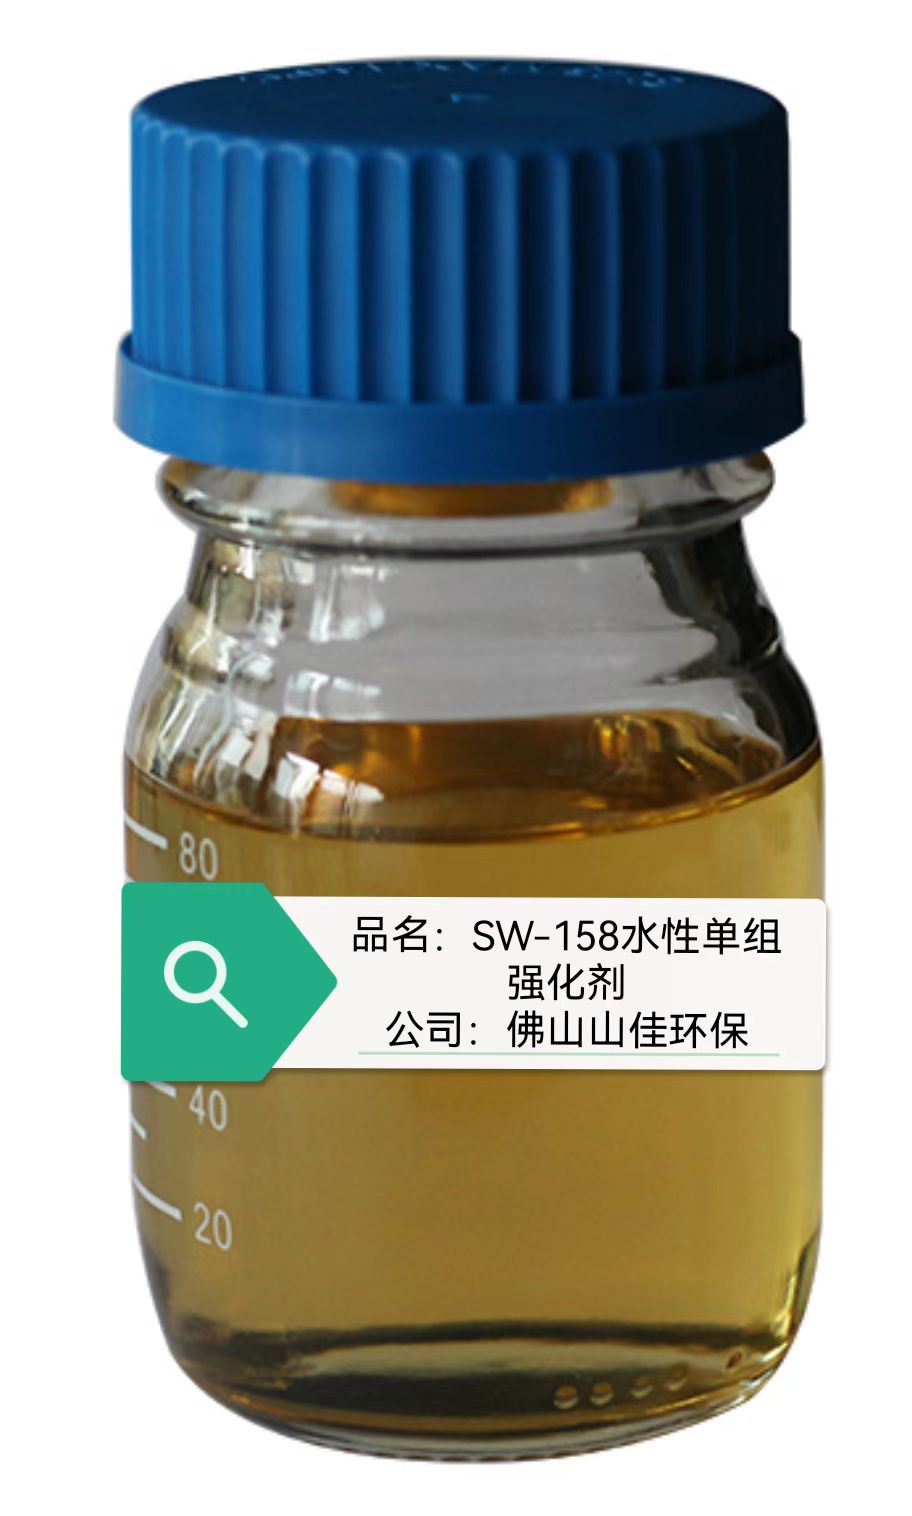 SW-158单组强化剂